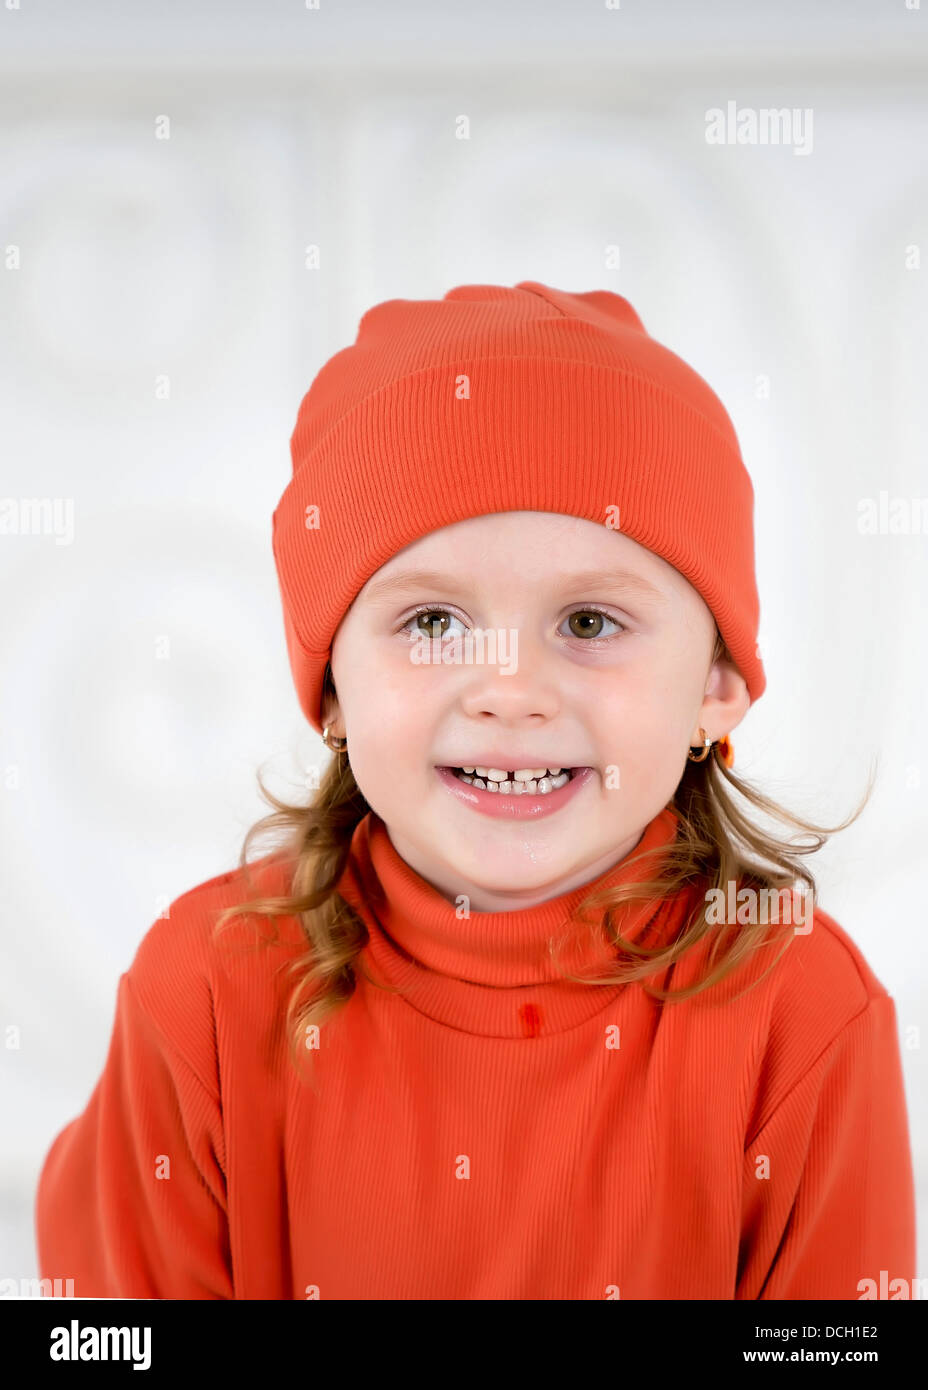 Little girl portrait Stock Photo - Alamy